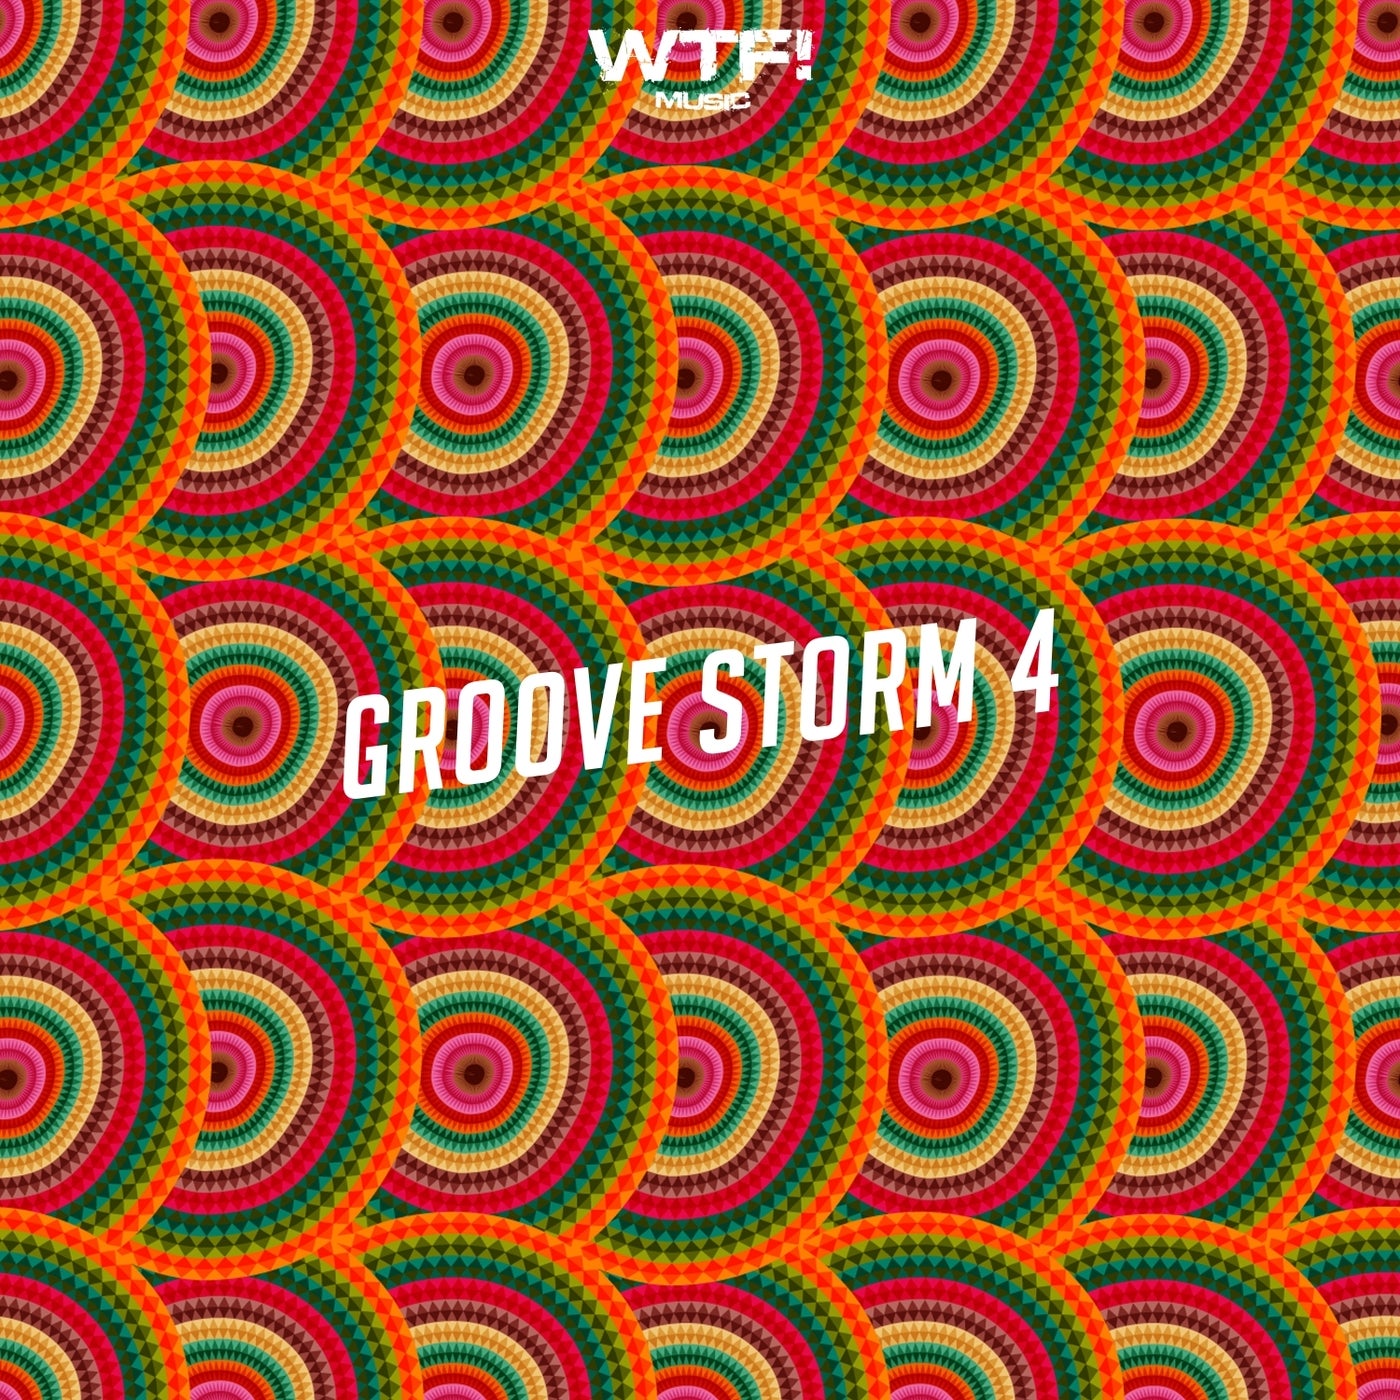 Groove Storm 4